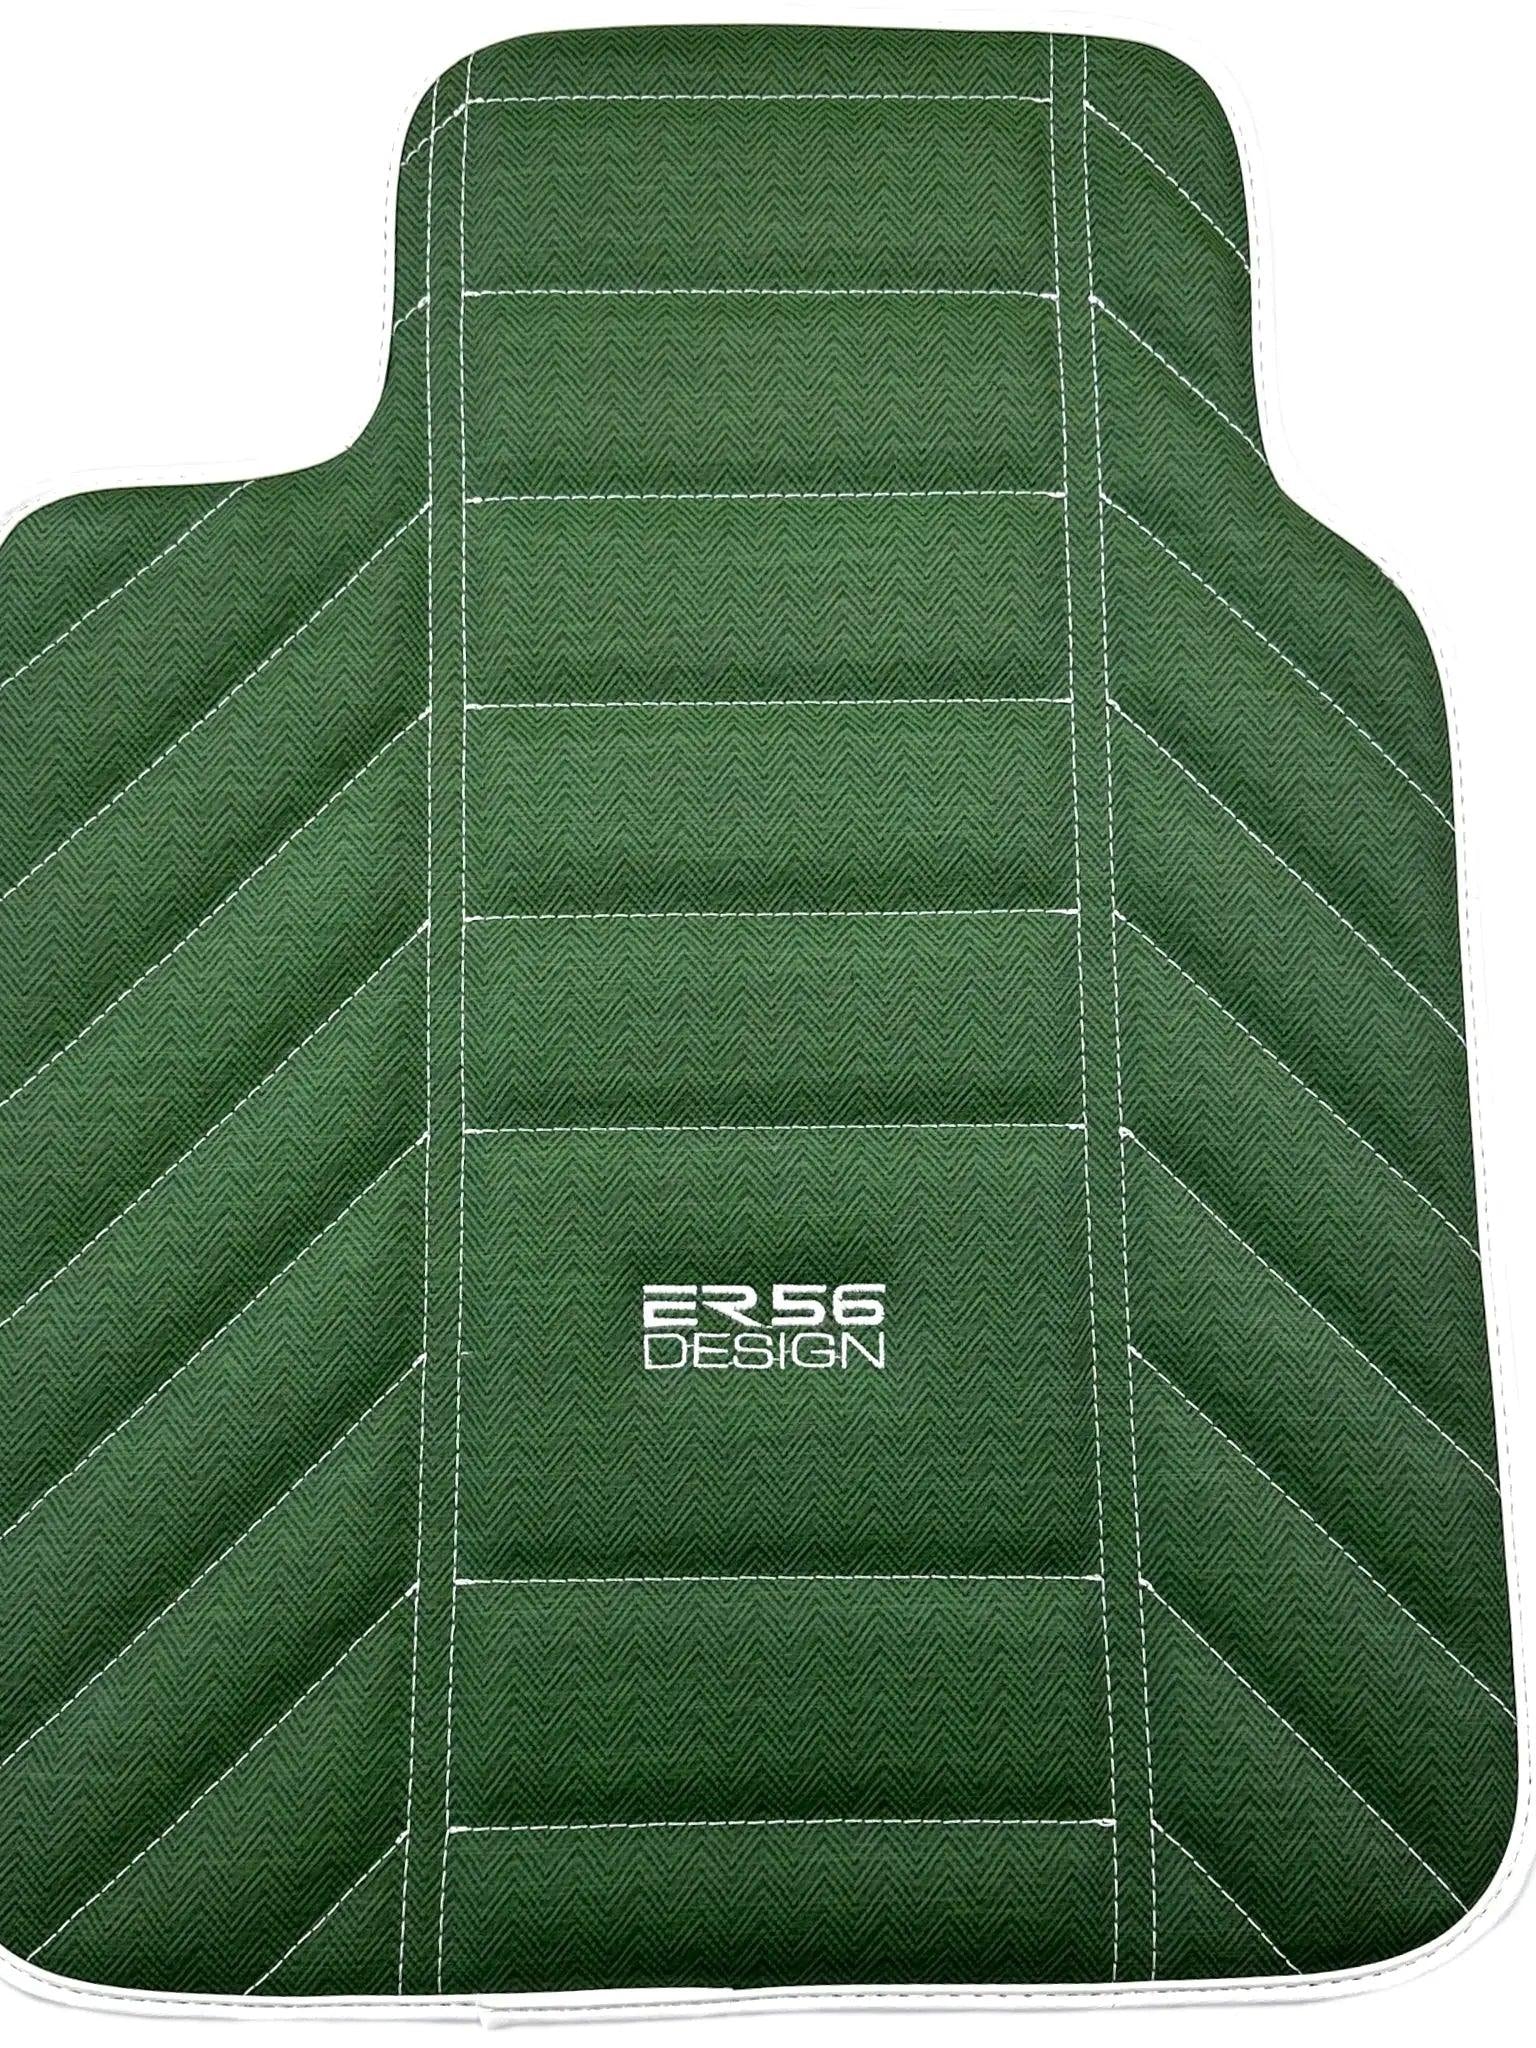 Green Leather Floor Mats For Rolls Royce Shadow 1965-1977